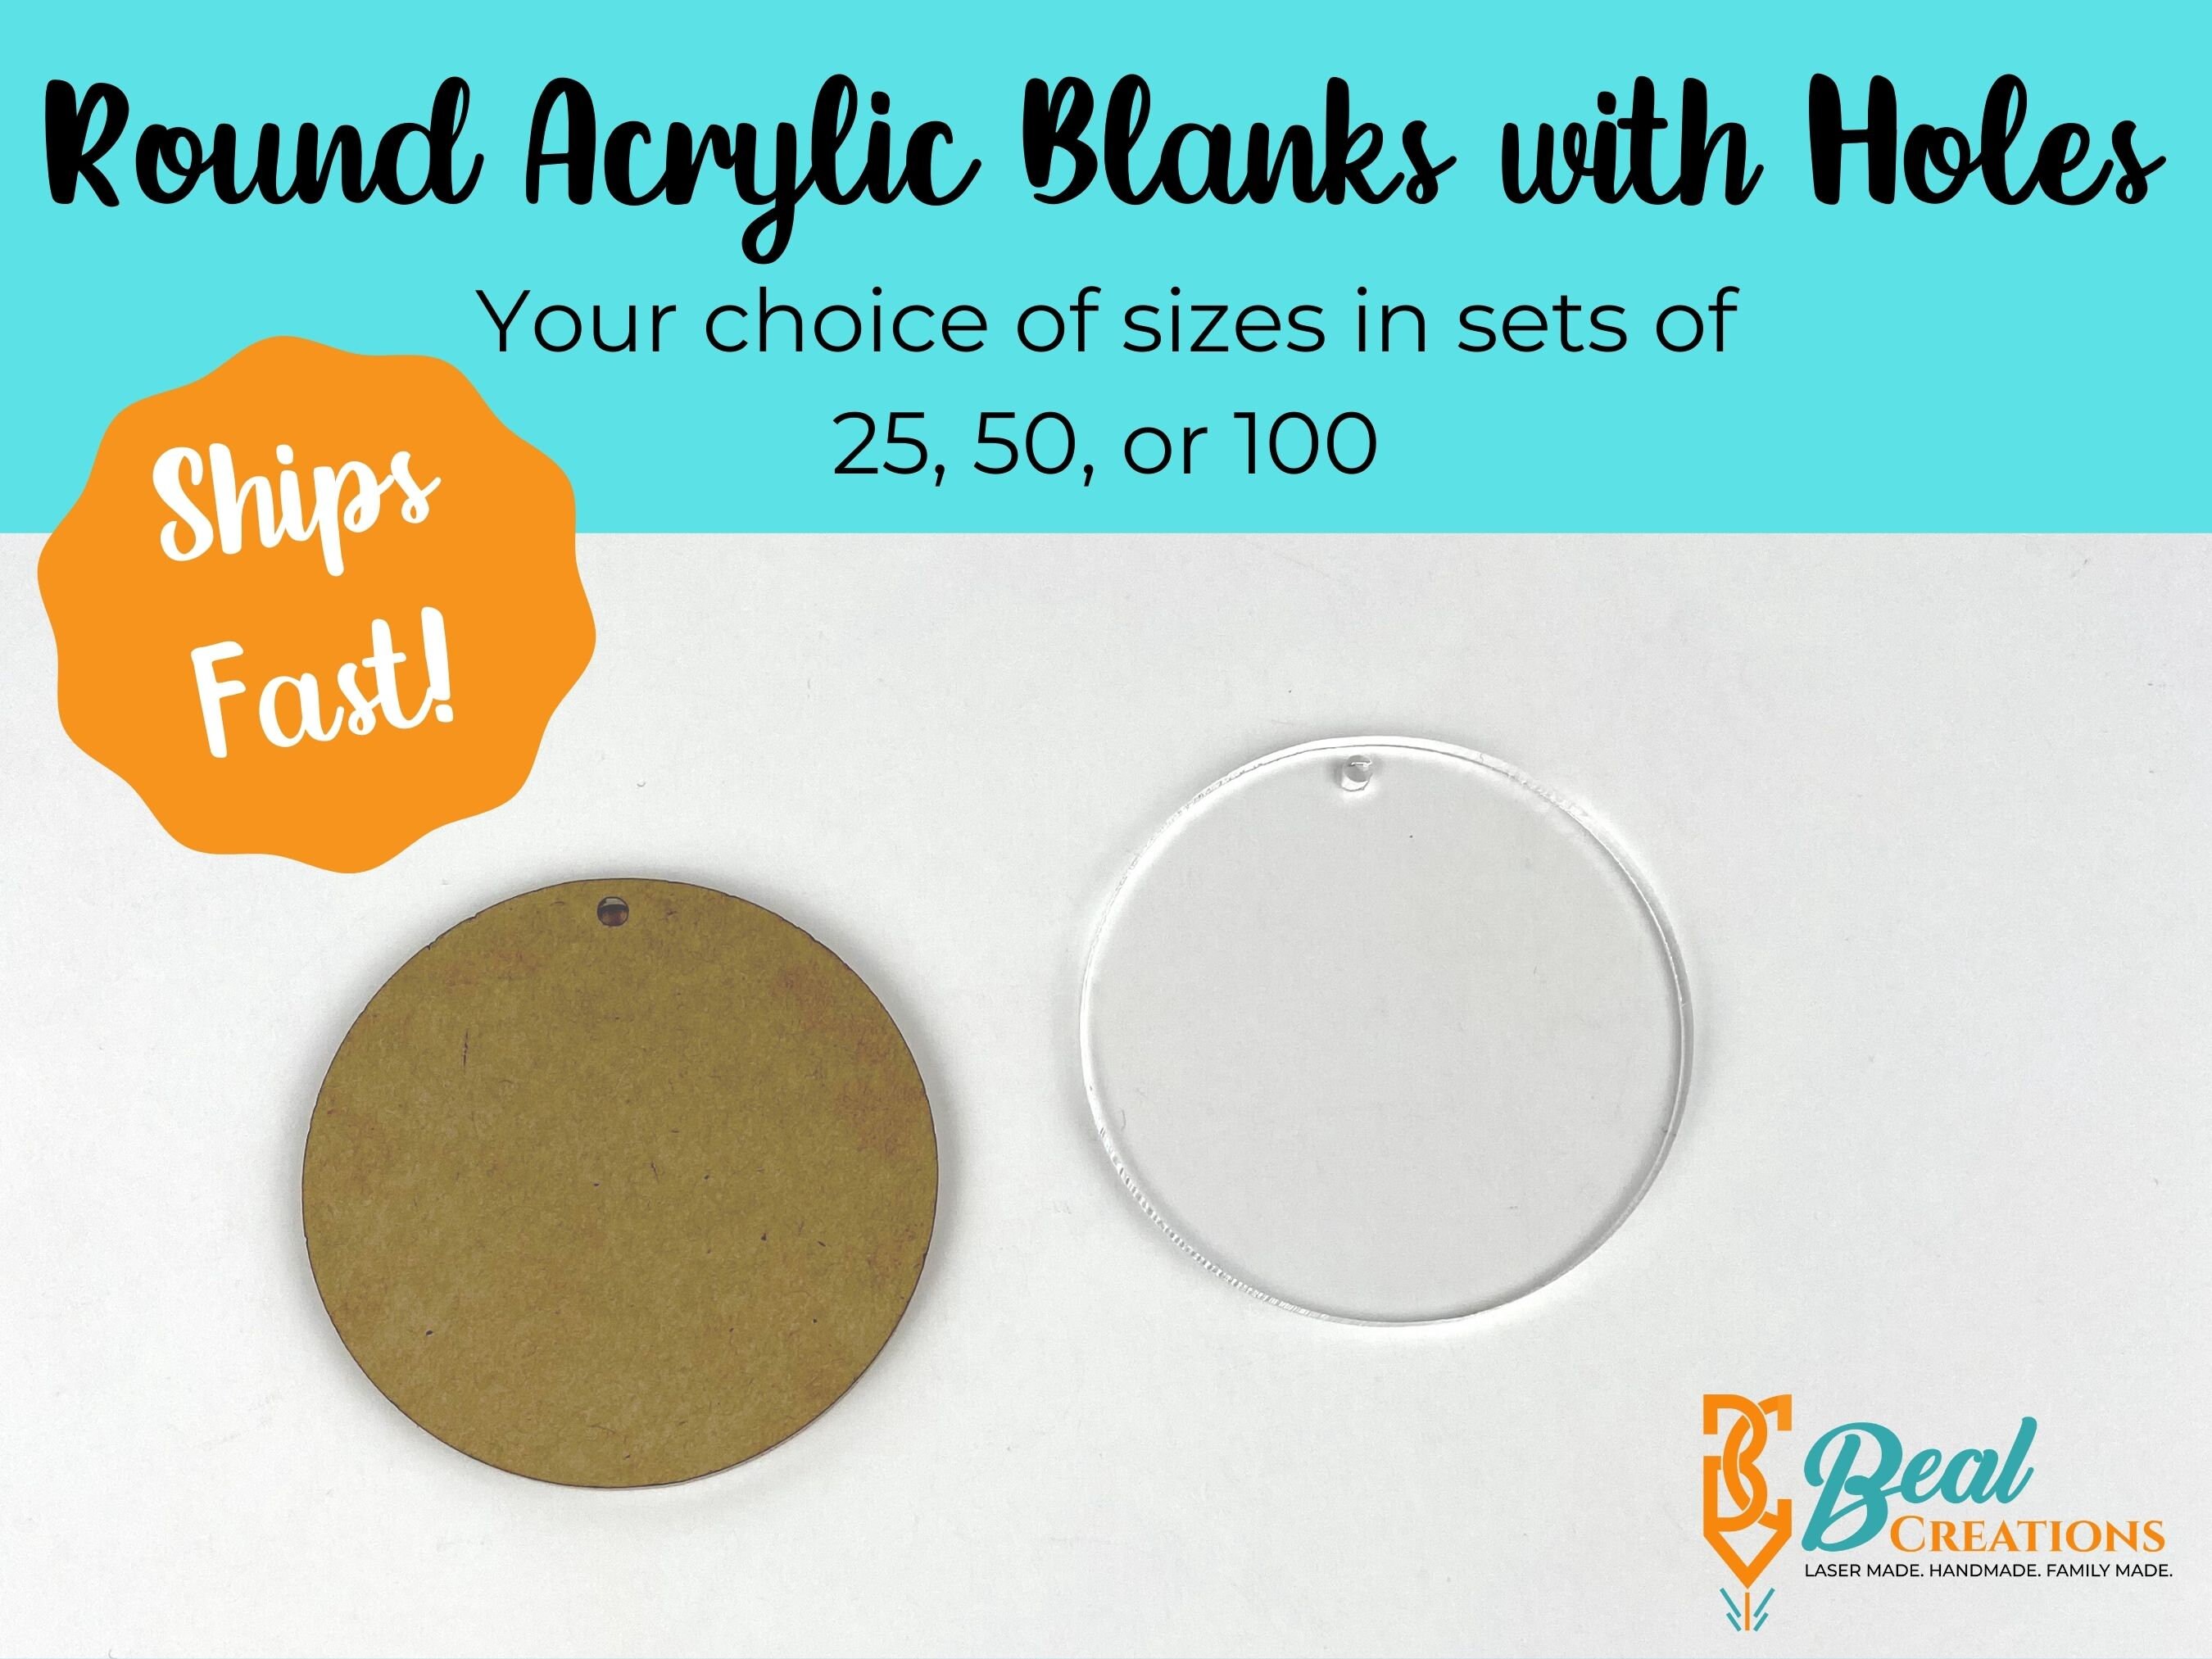 Round Acrylic Blanks - Beal Creations